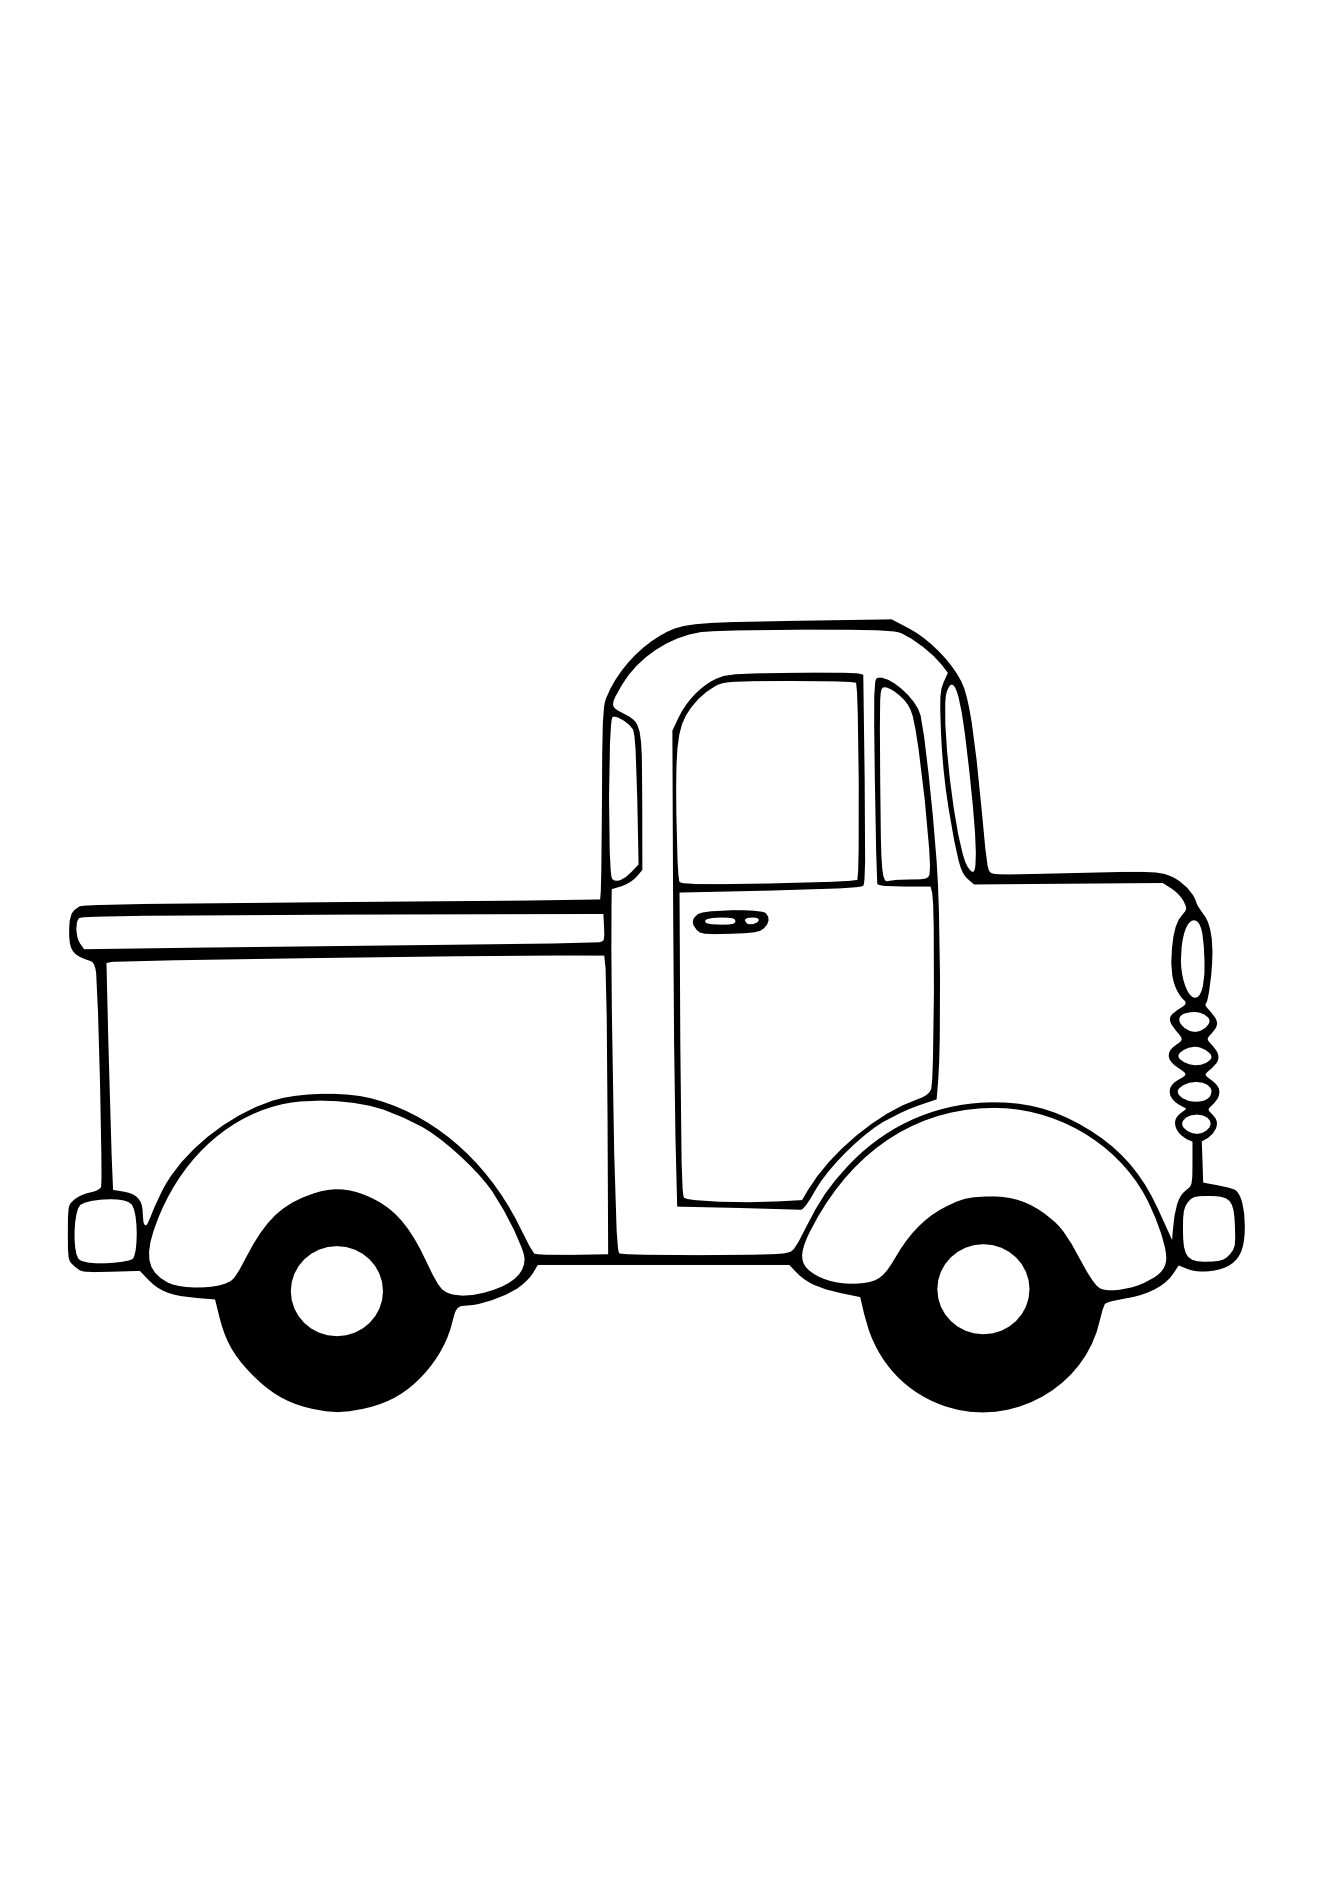 Semi truck clipart black and white